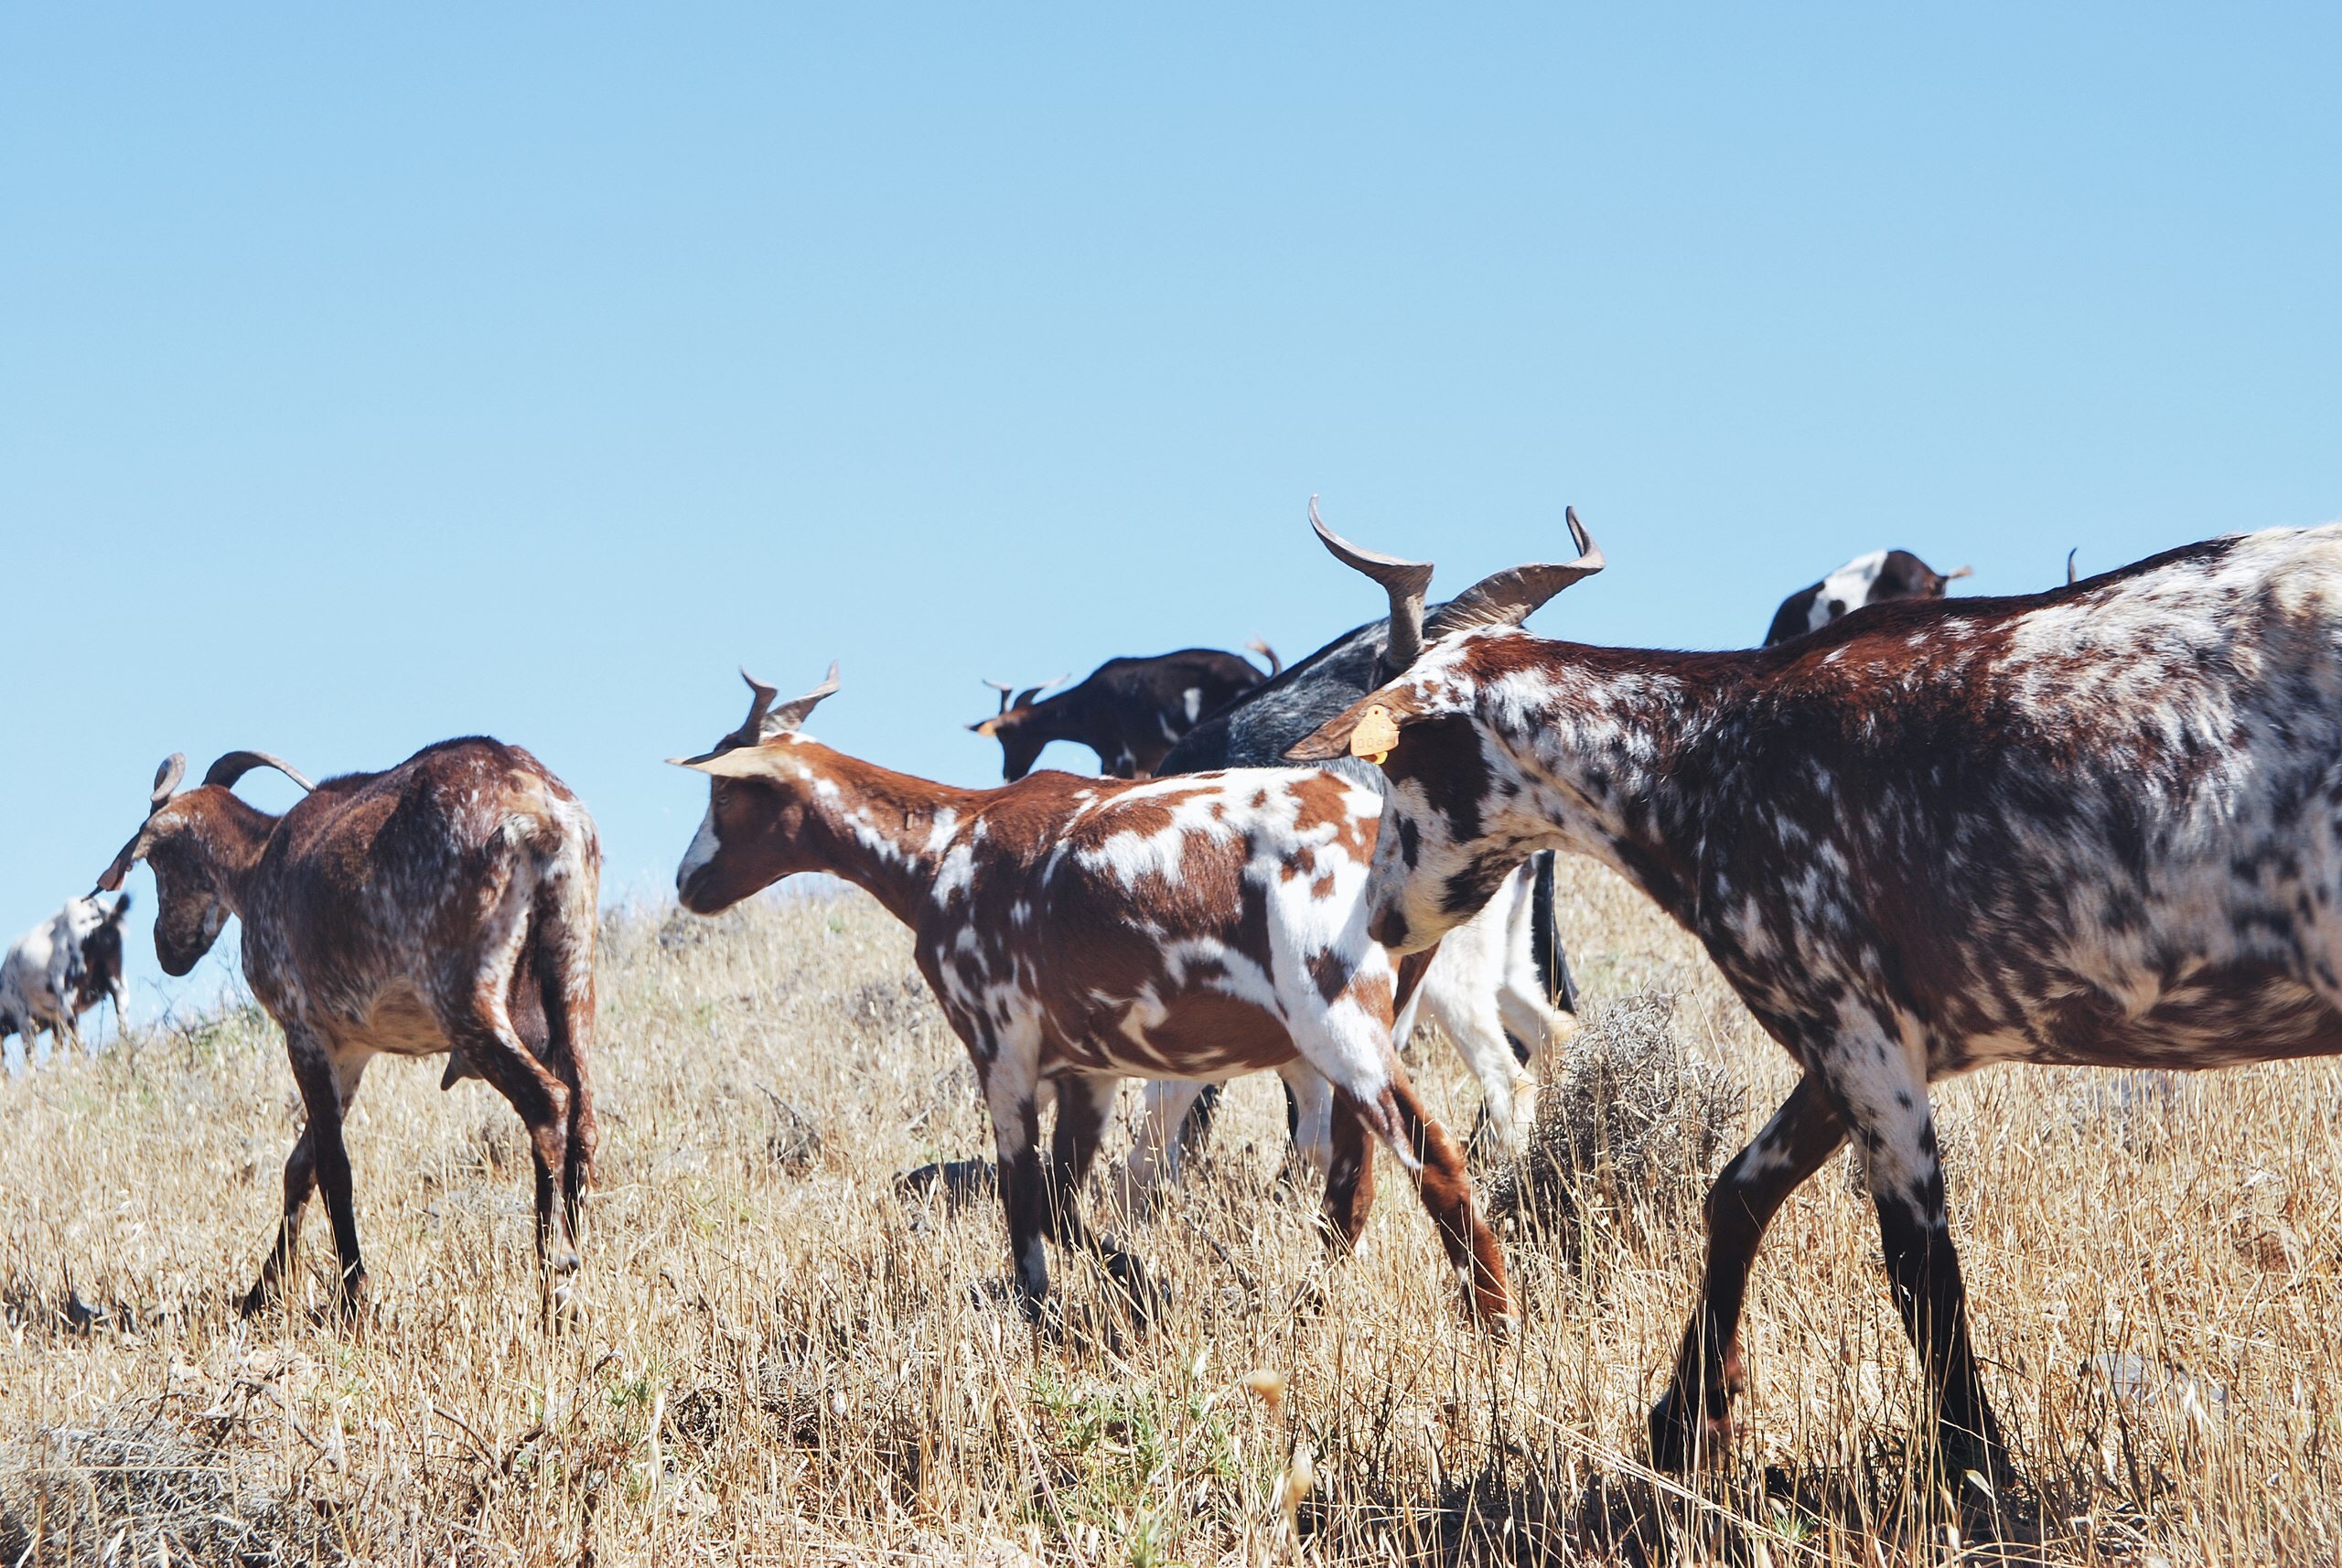 Herd of goat on grass field photo